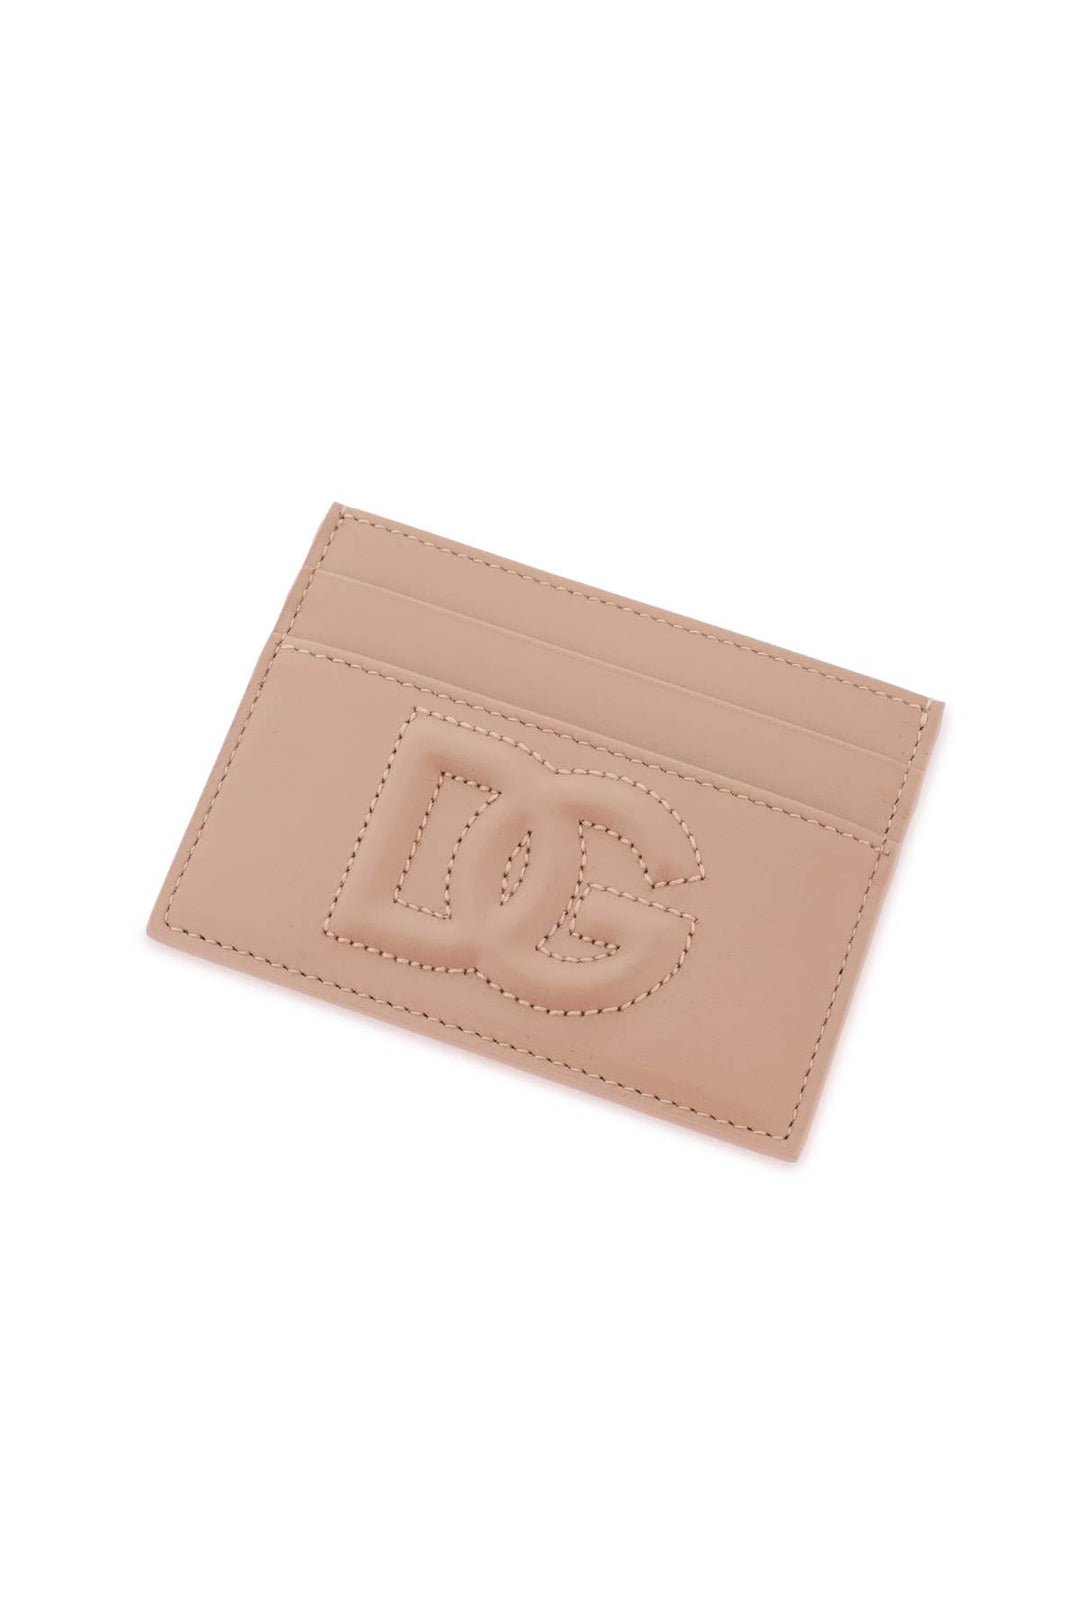 Dolce & Gabbana Dg Logo Cardholder   Neutro